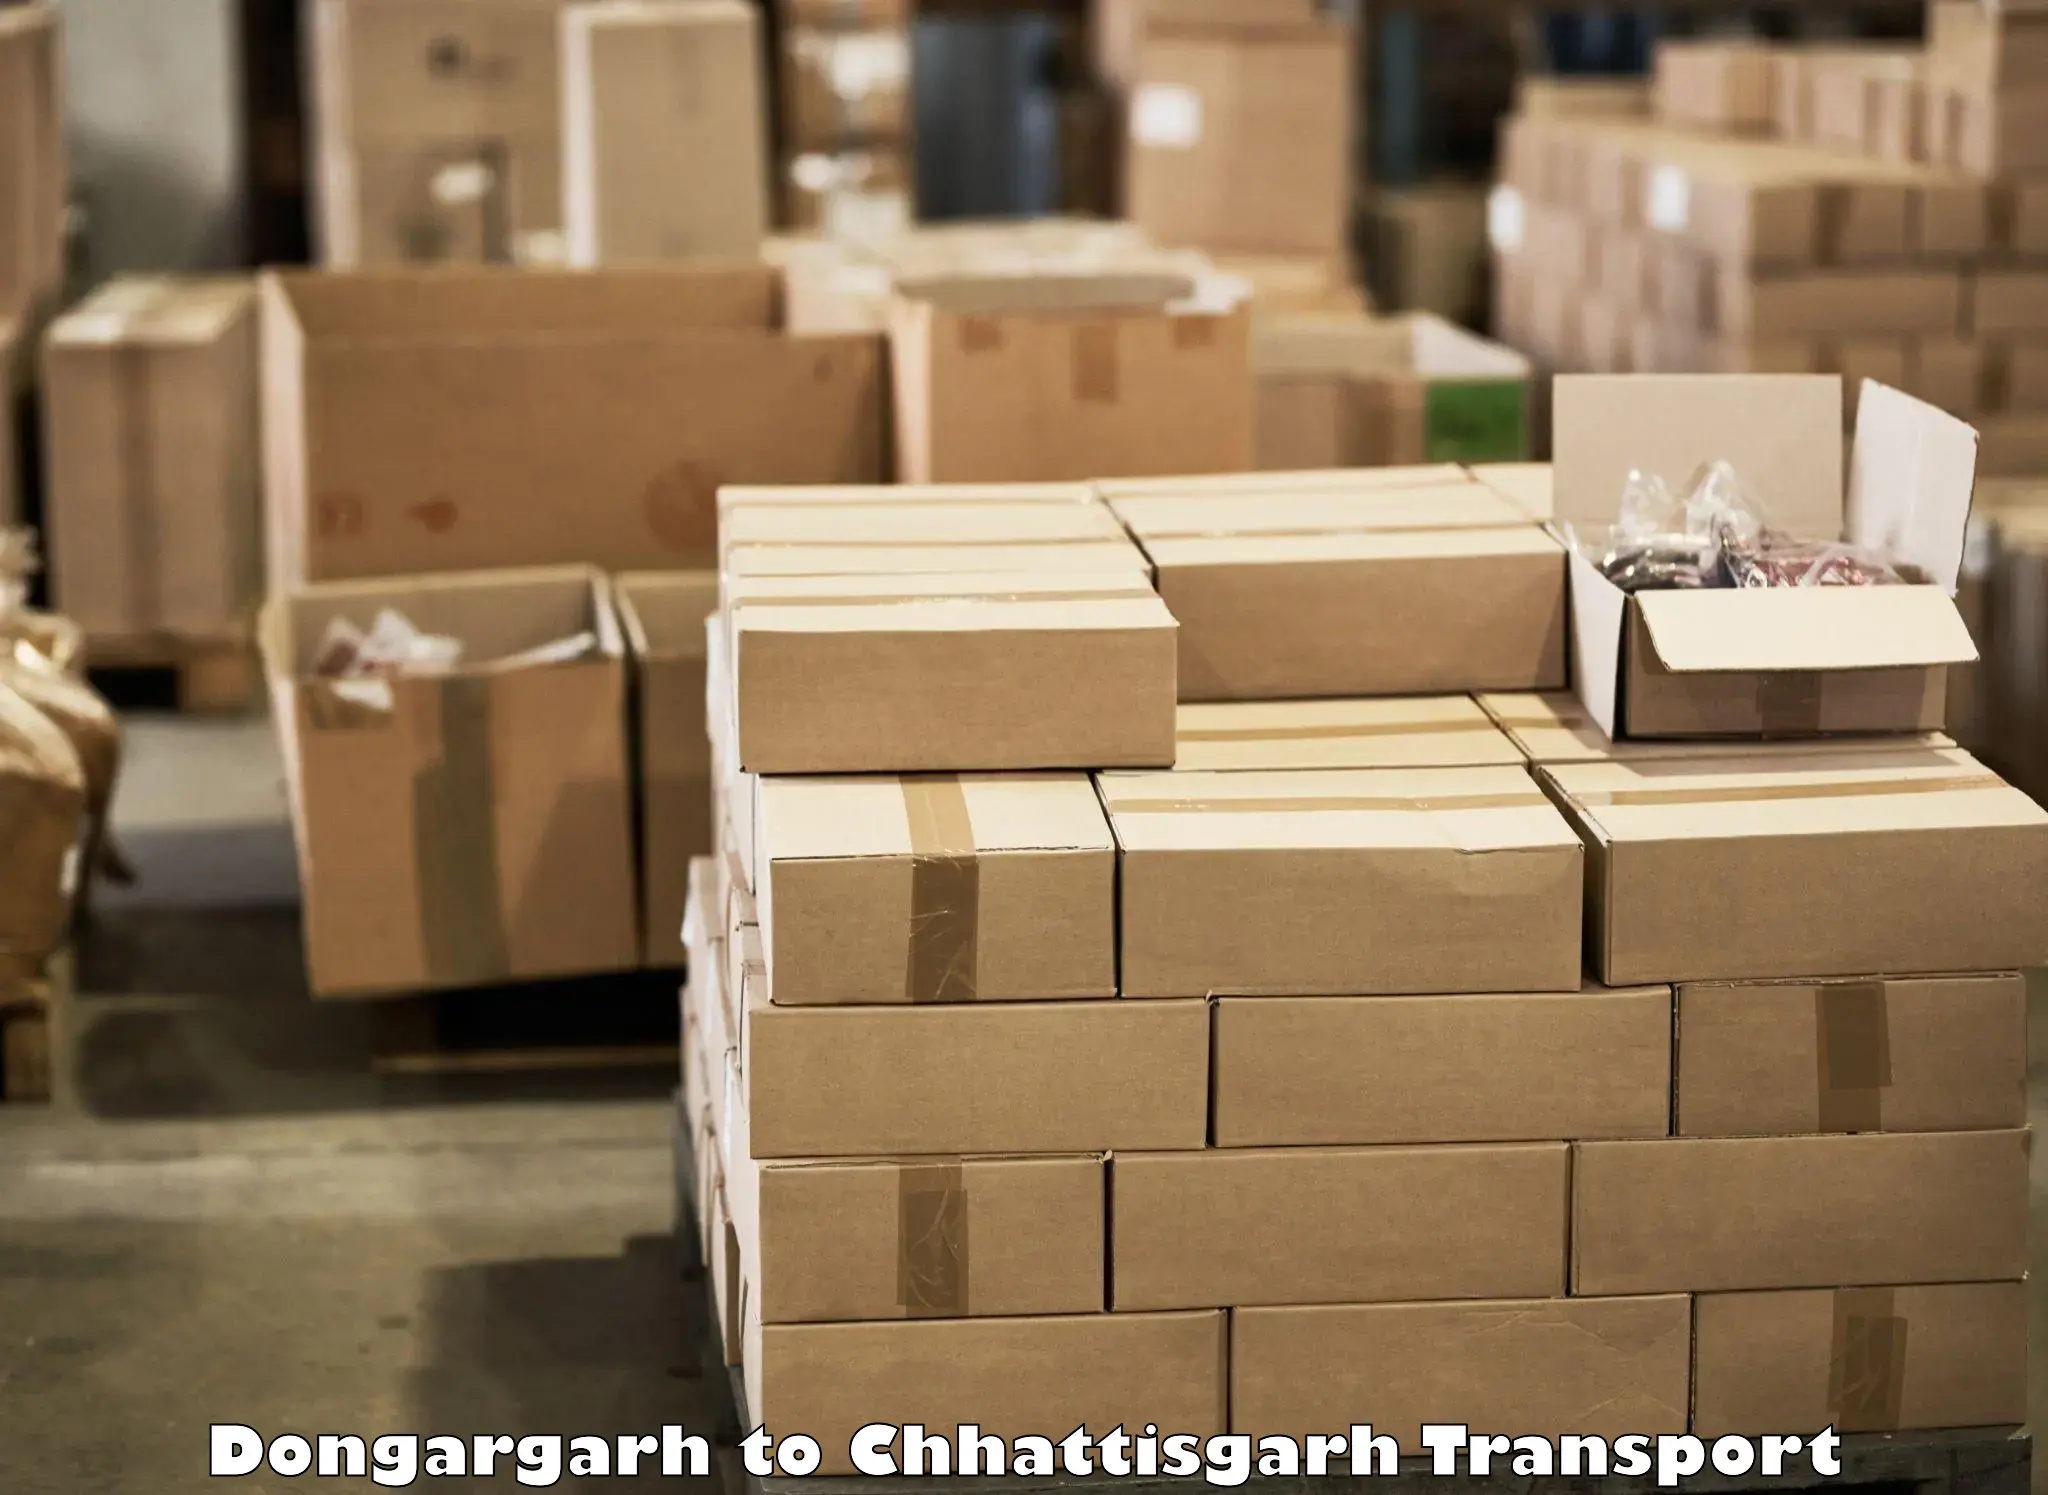 Truck transport companies in India Dongargarh to Dongargarh